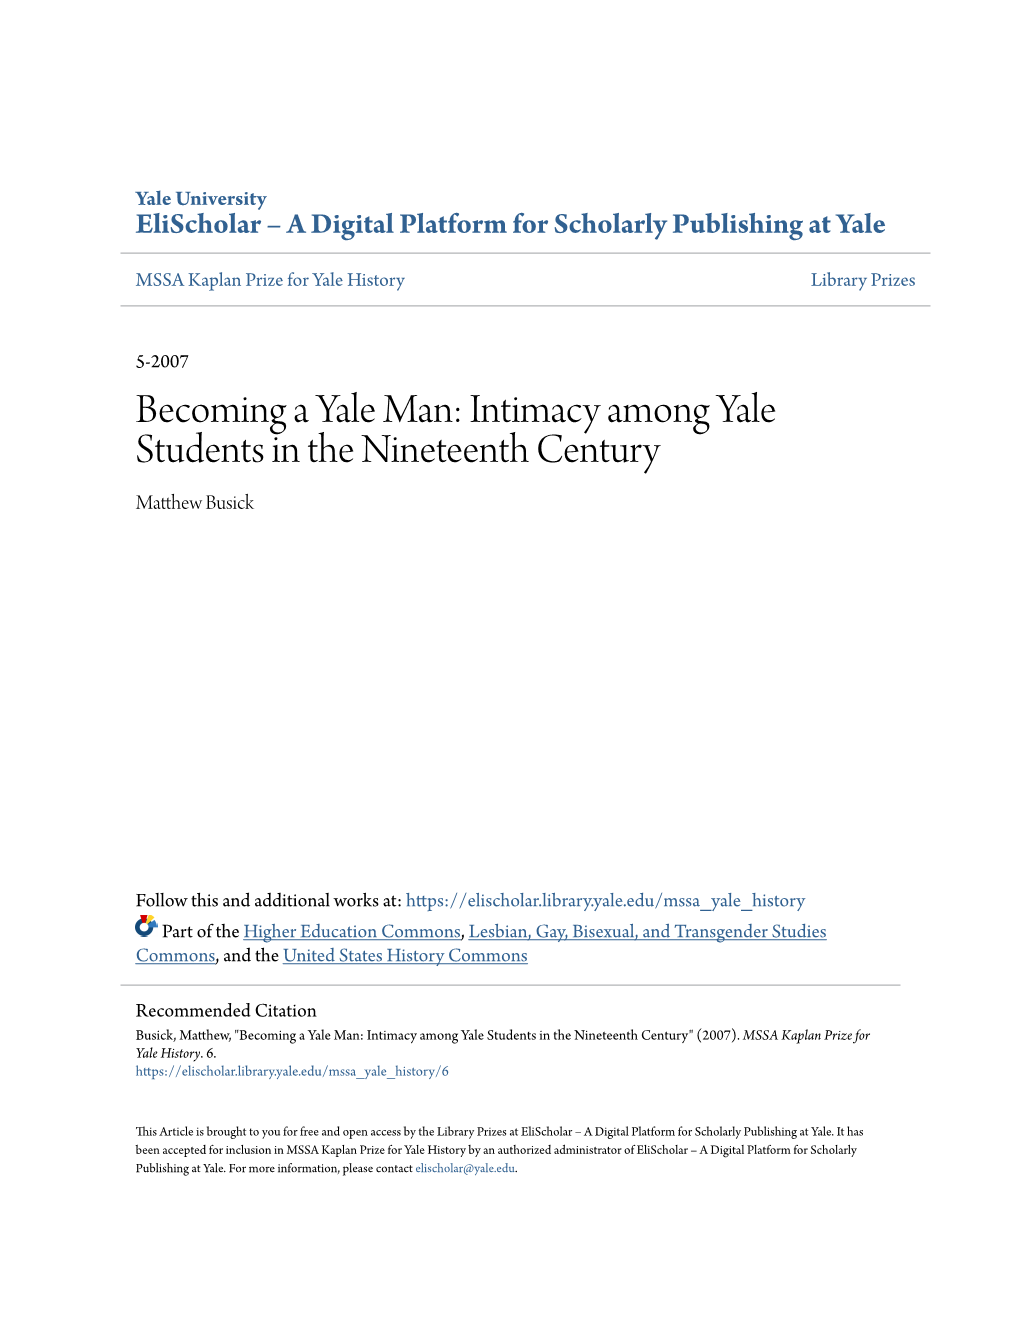 Intimacy Among Yale Students in the Nineteenth Century Matthew Ub Sick